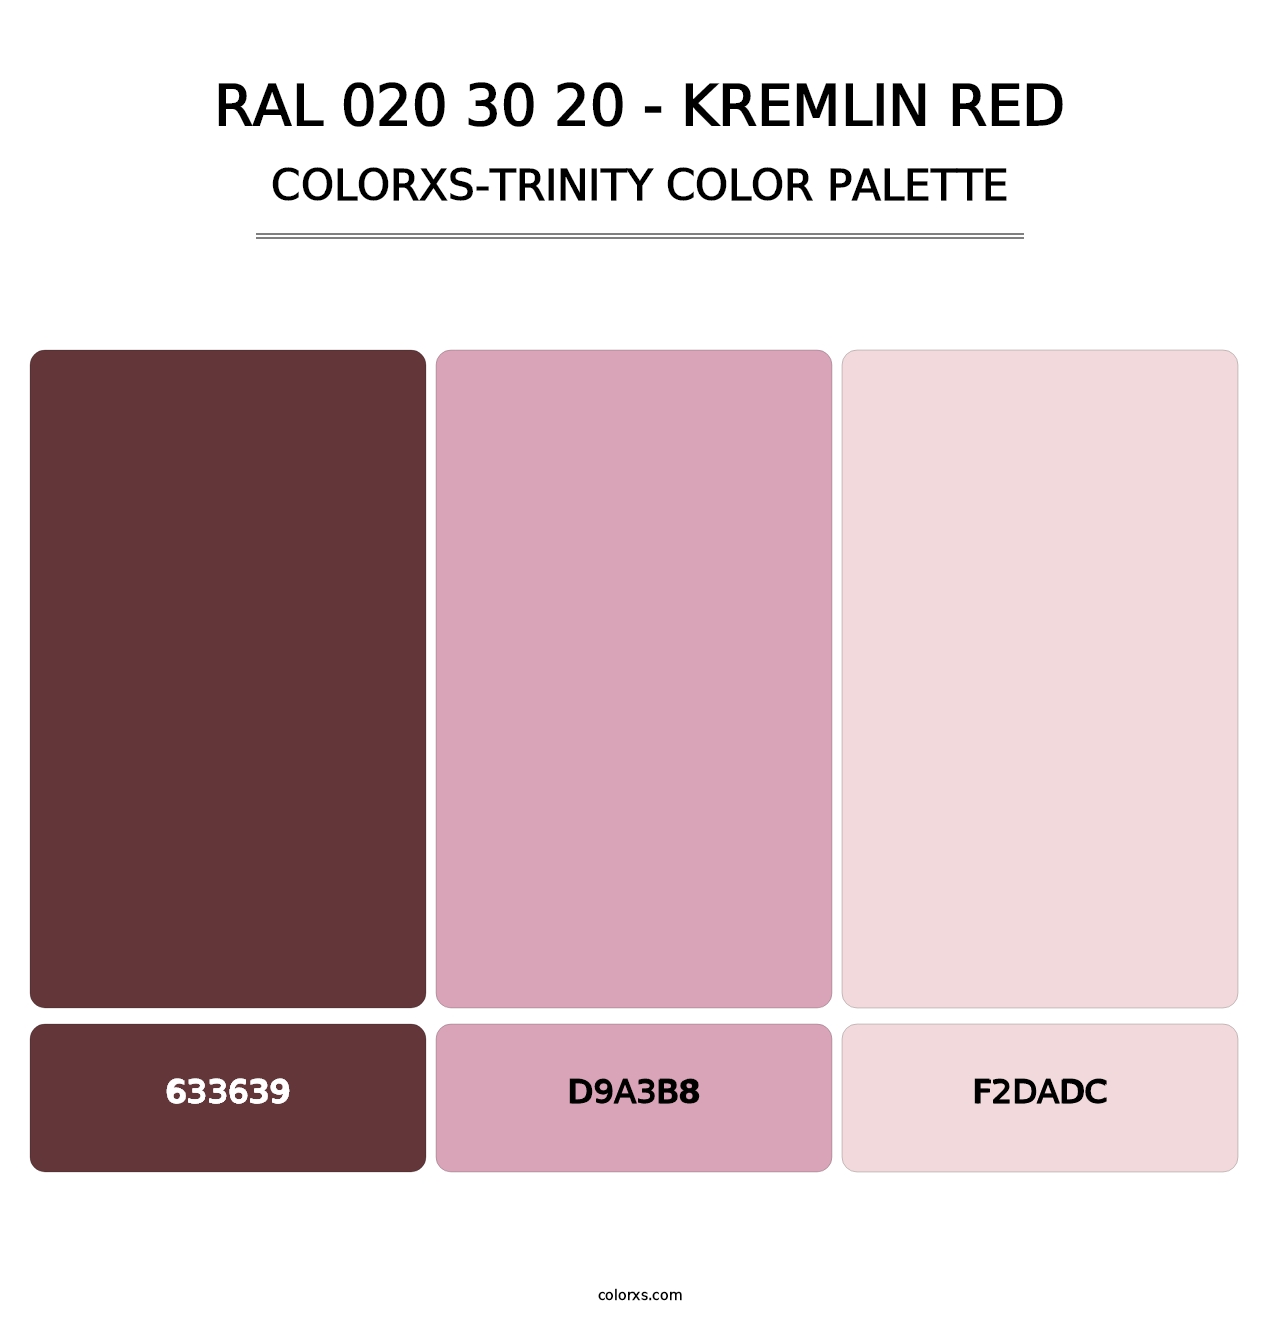 RAL 020 30 20 - Kremlin Red - Colorxs Trinity Palette